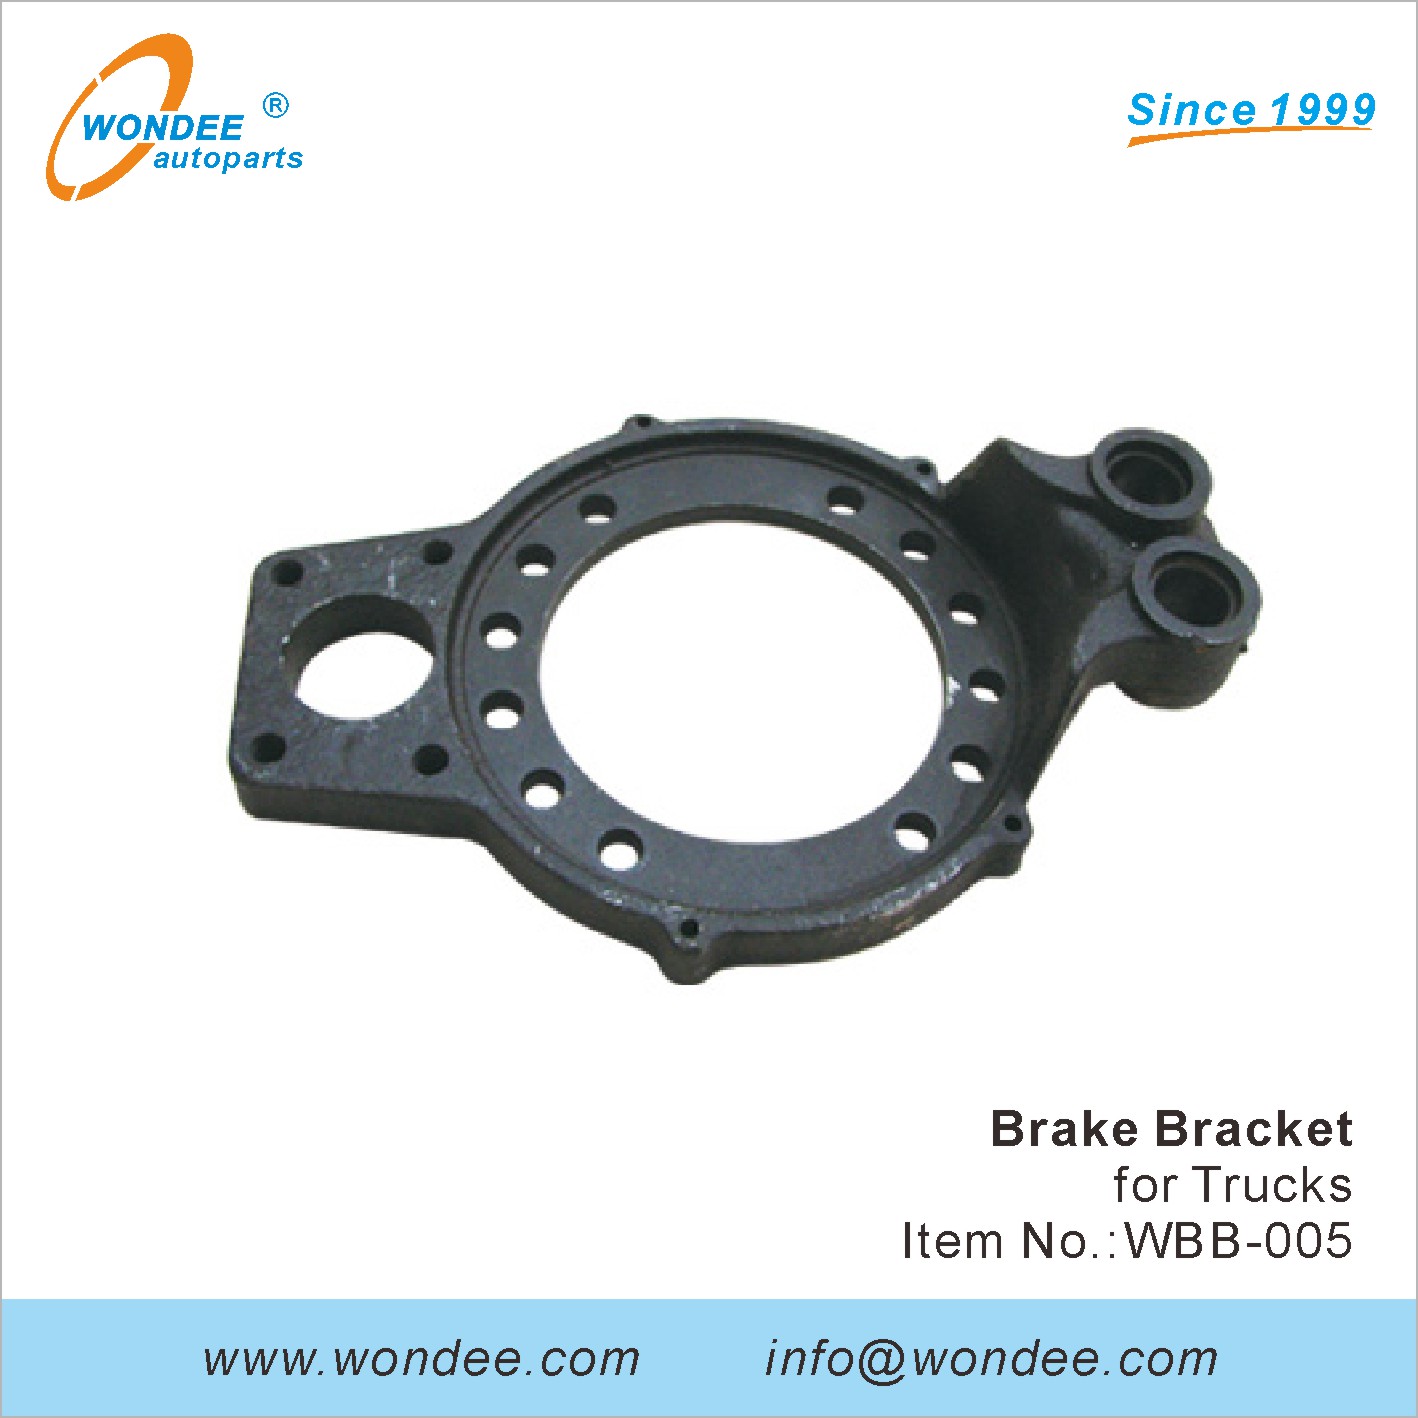 WONDEE brake bracket (5)